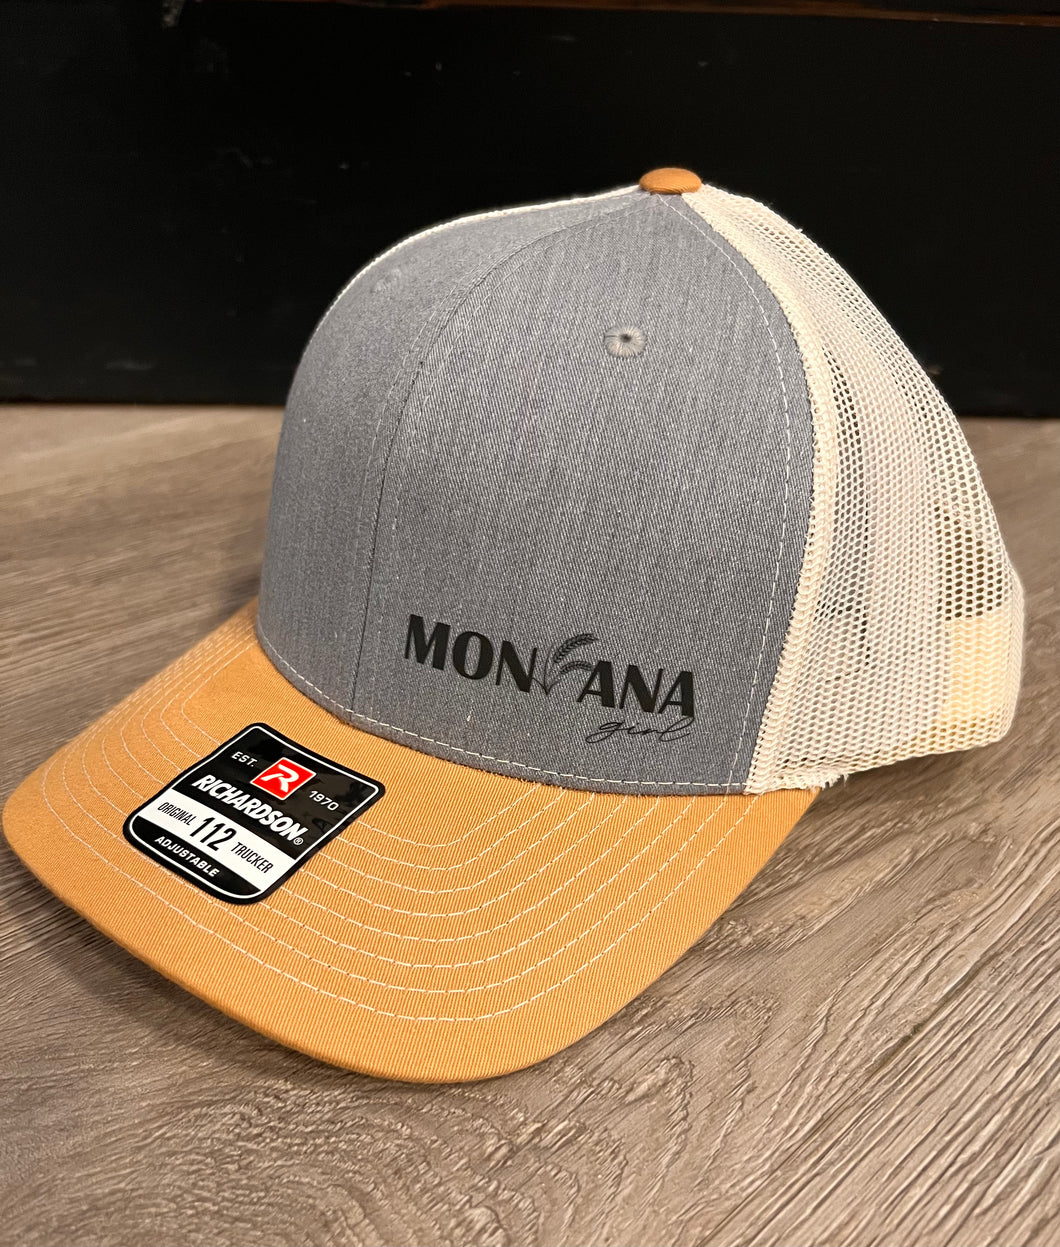 Montana Wheat Hat